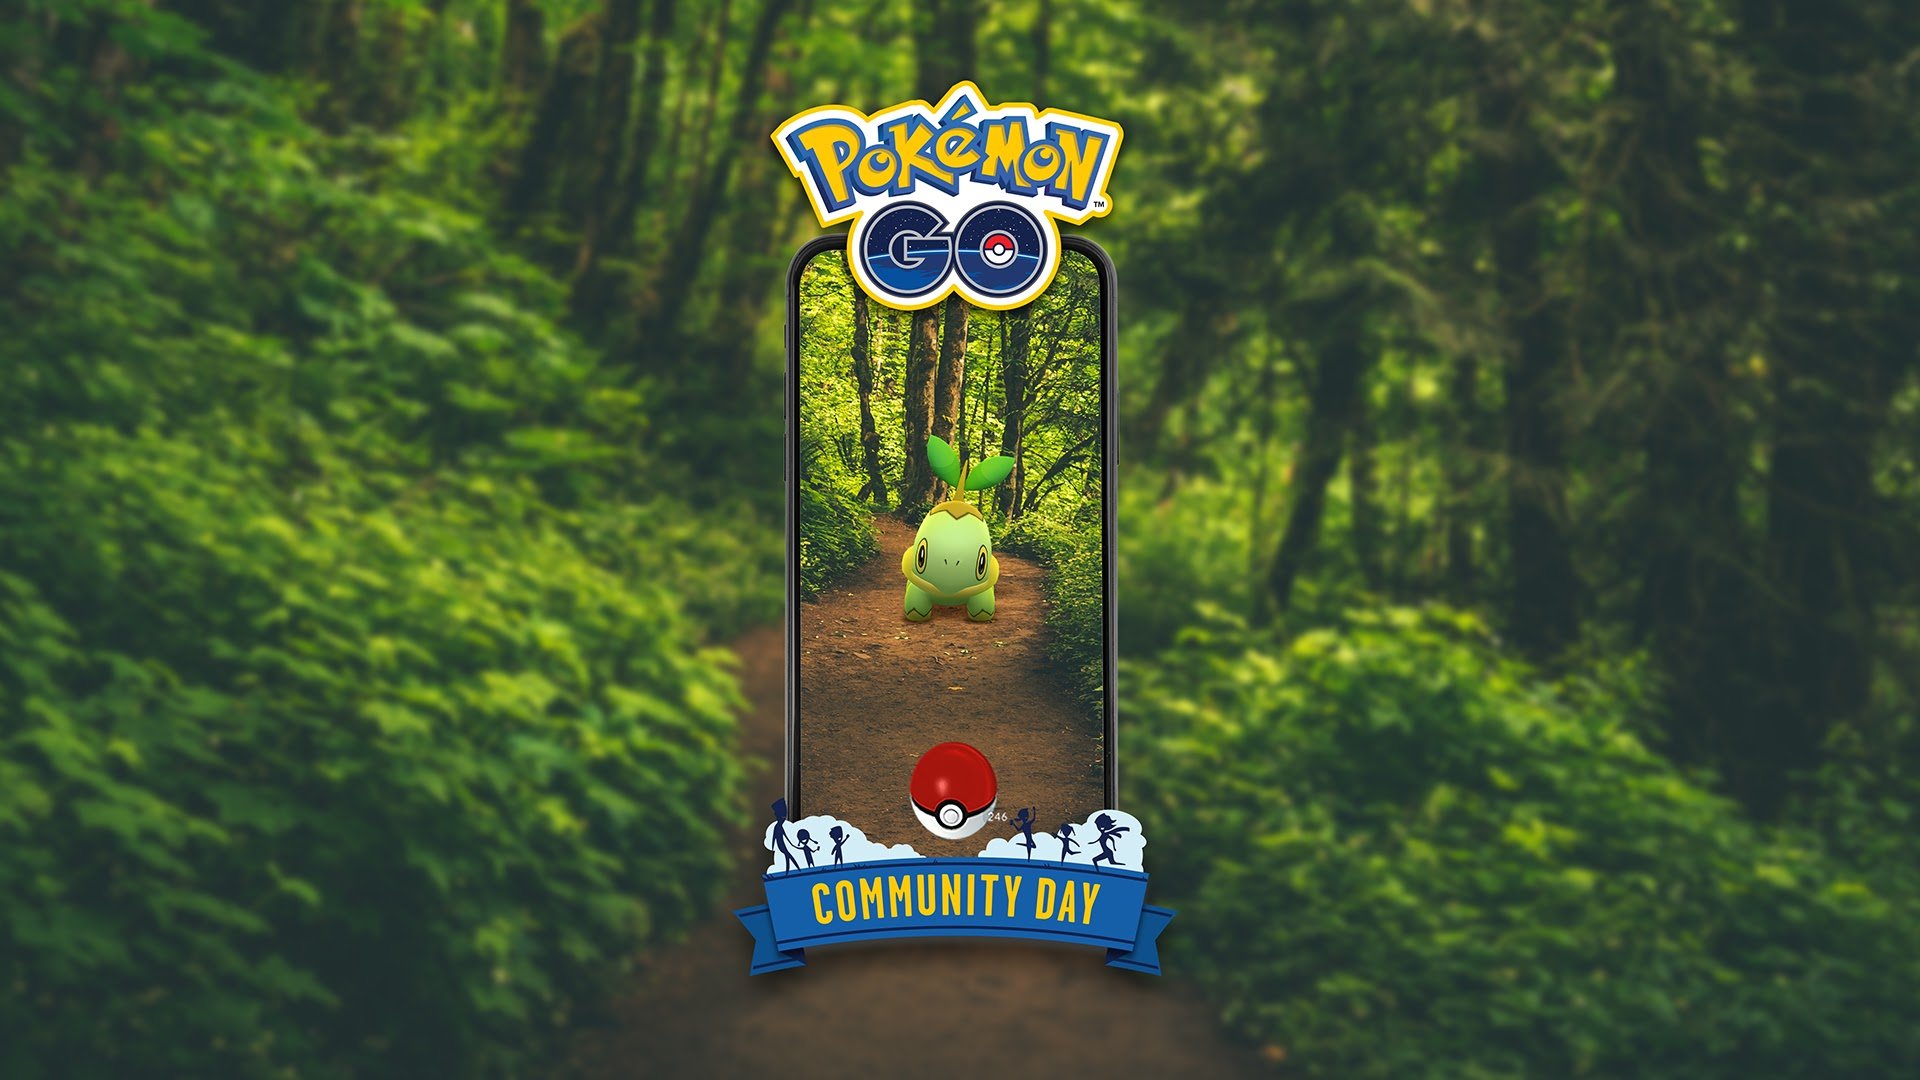 Turtwig Community Day Announced! Pokémon GO Hub